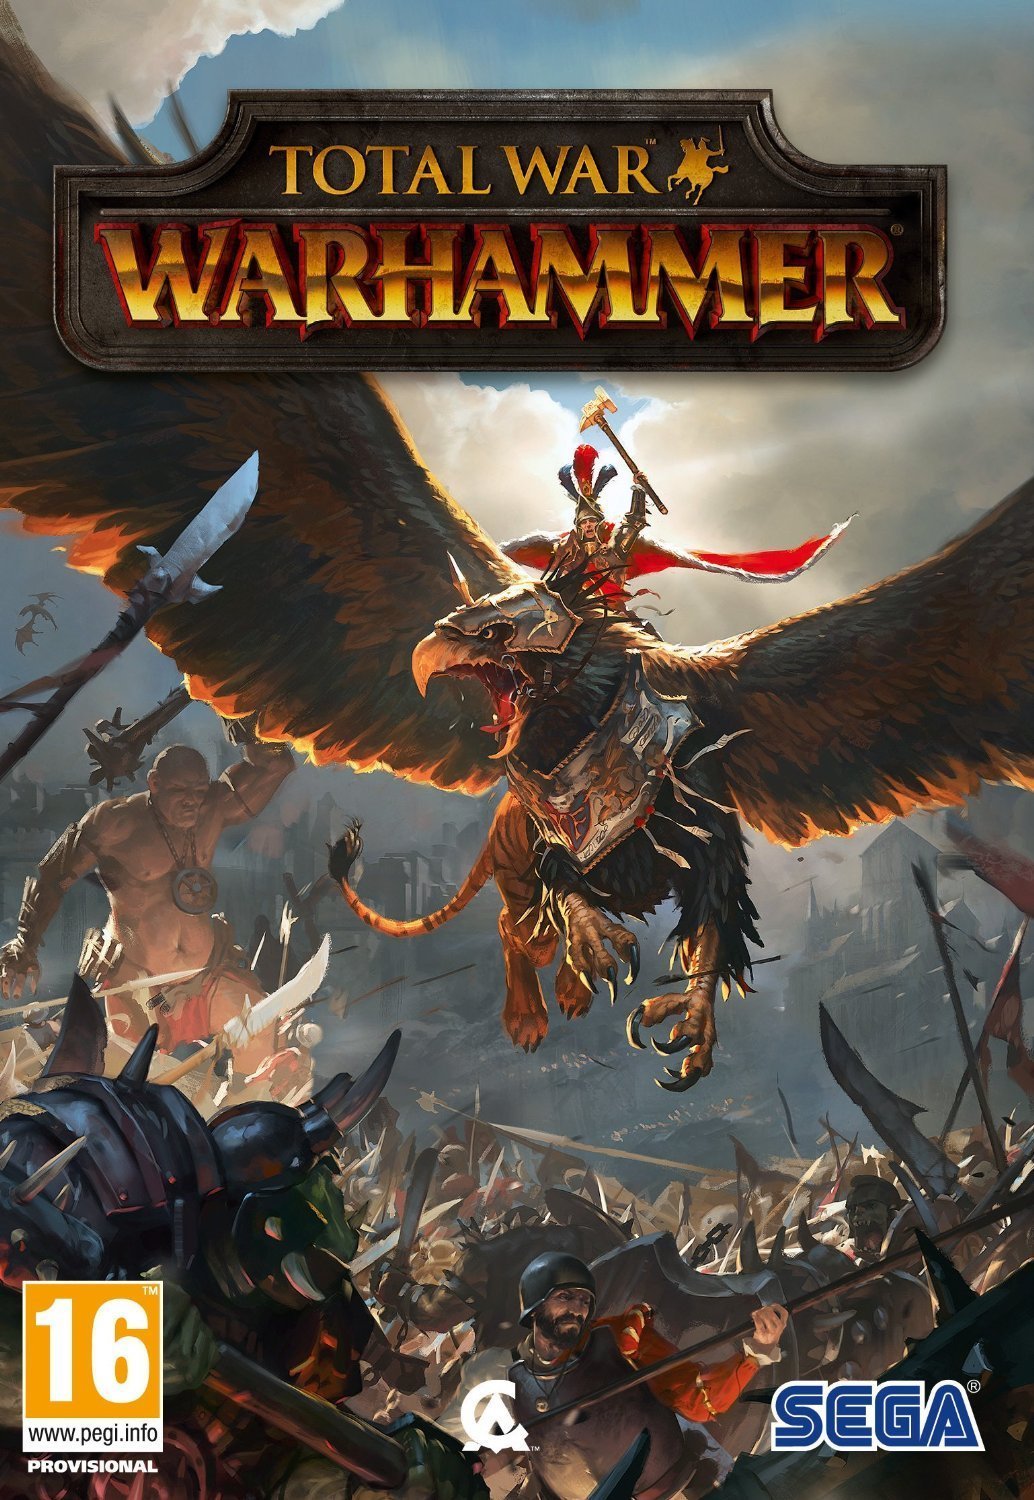 [PC] Total War™: WARHAMMER (Stategy|RTS|Fantasy|2016)